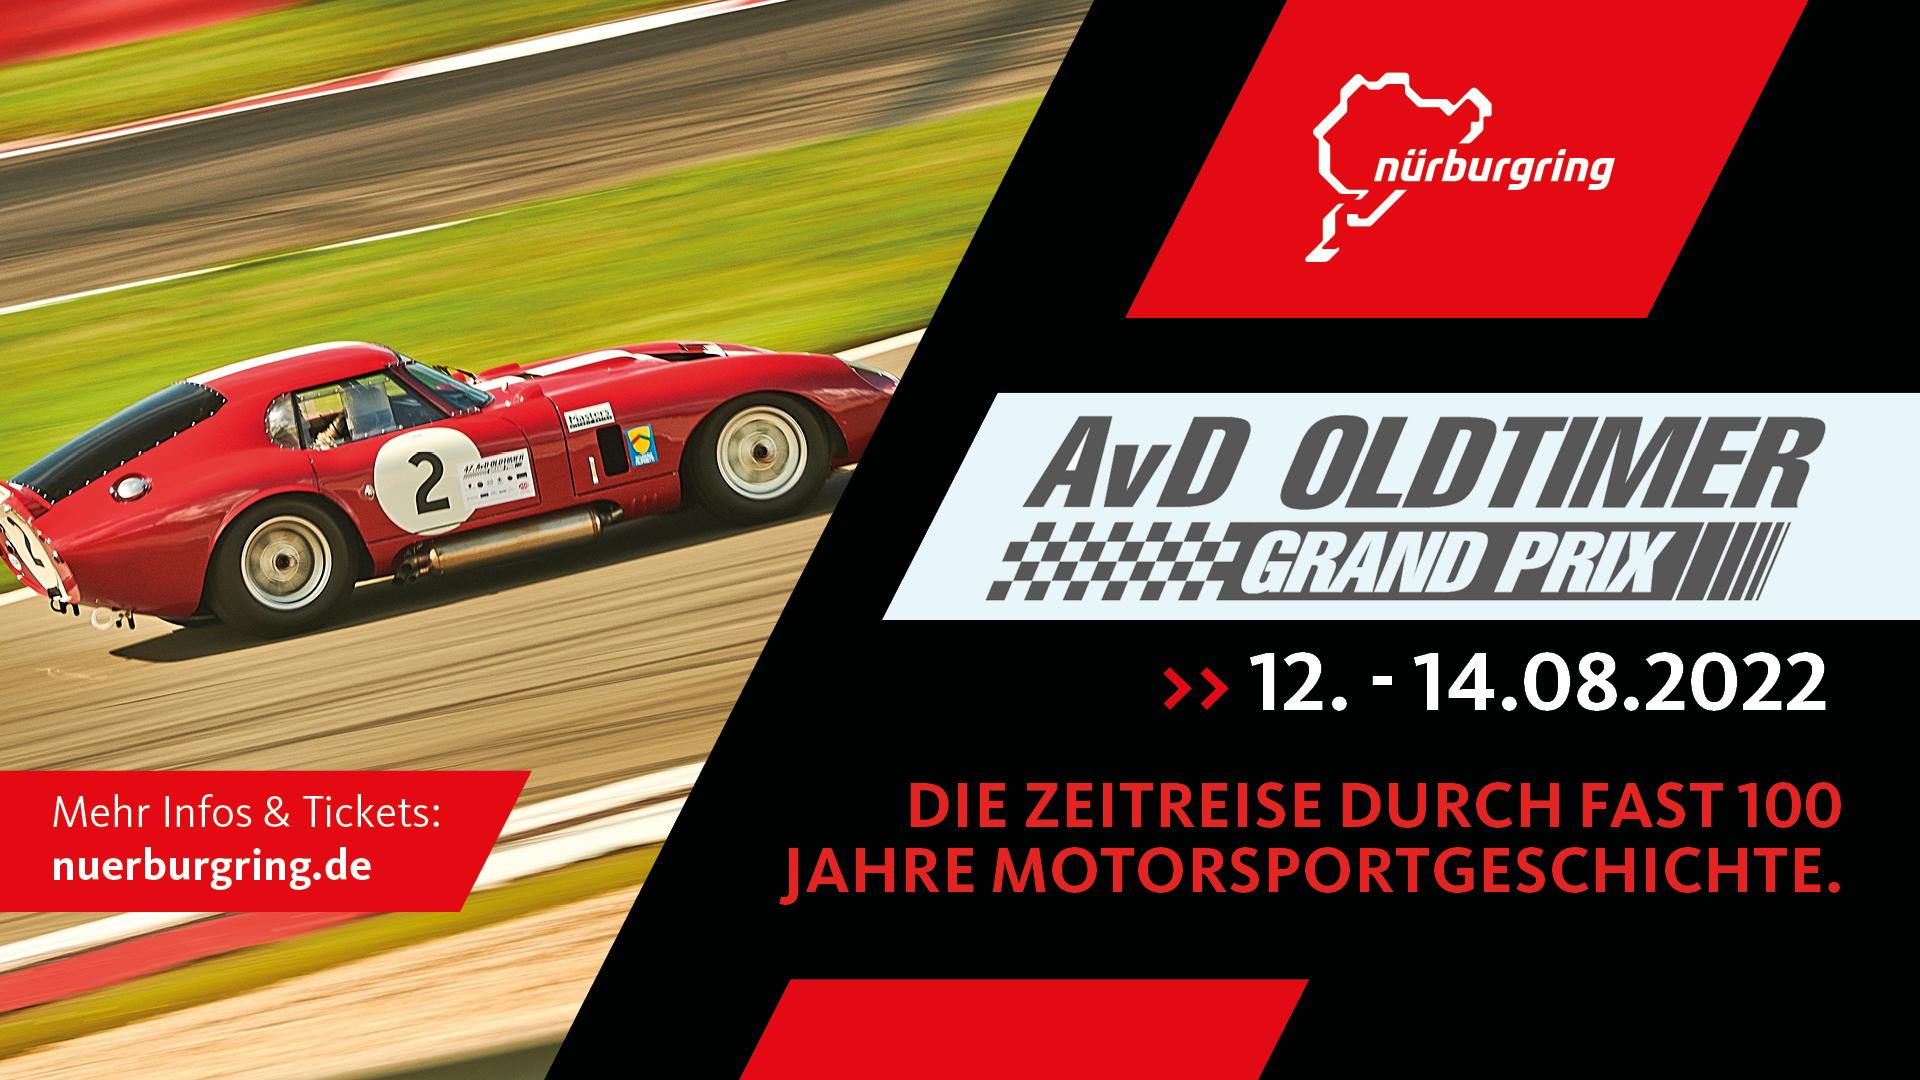 Plakat, @ Nürburgring 1927 GmbH & Co KG